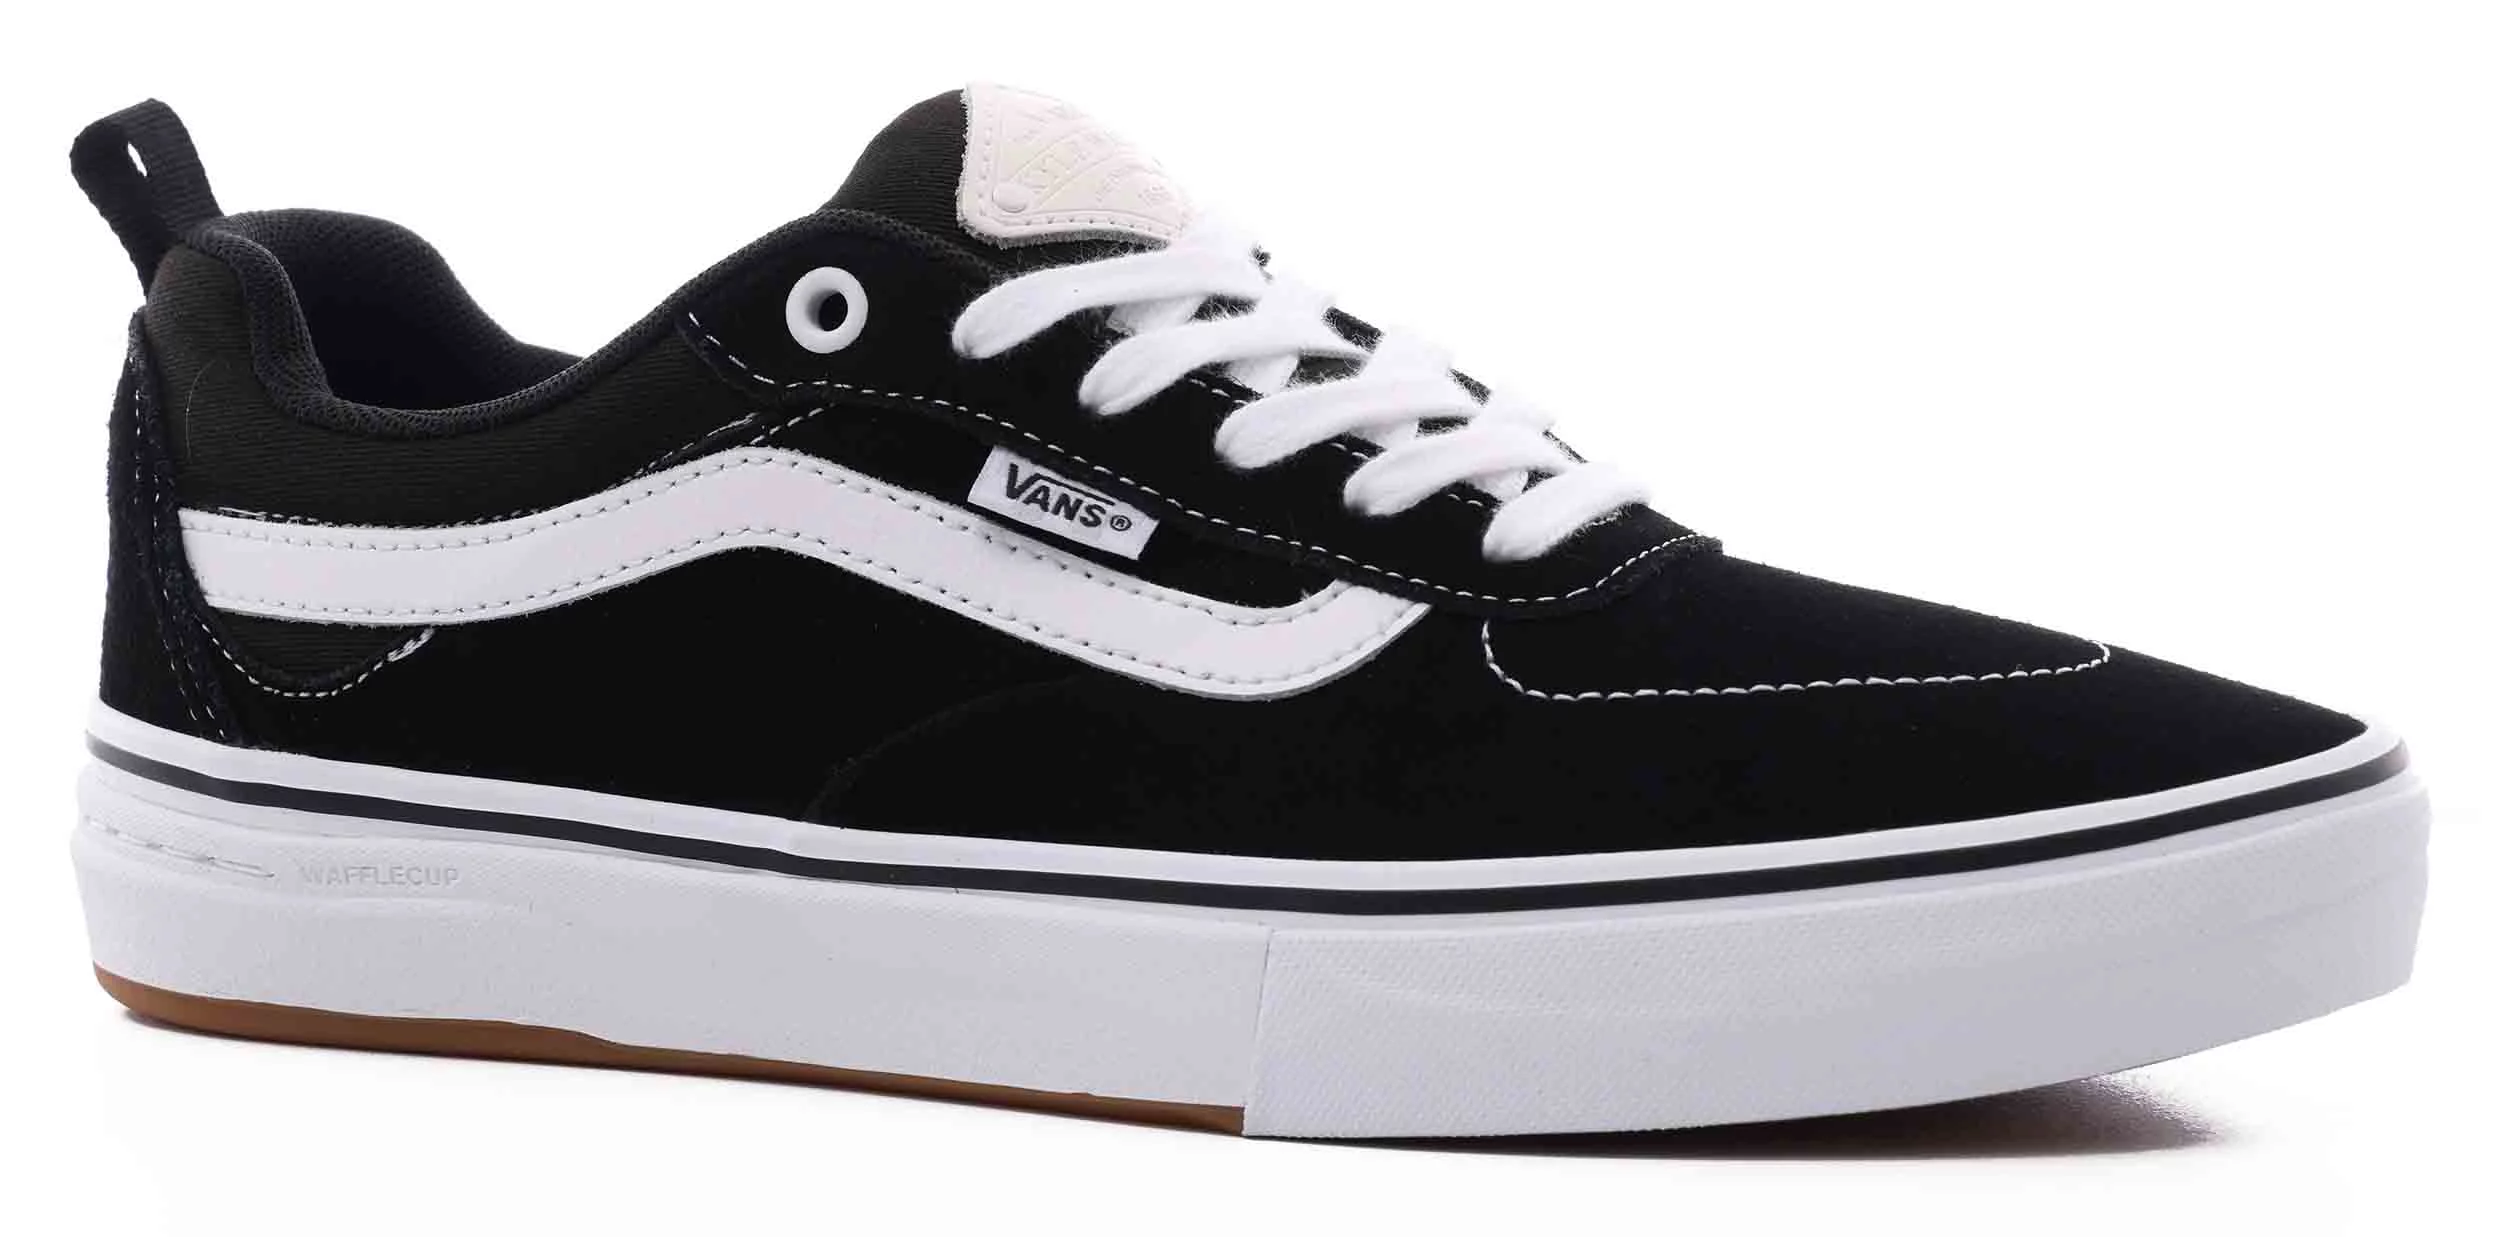 niemand Egypte Uitgraving Vans Kyle Walker Pro Skate Shoes - black/white - Free Shipping | Tactics